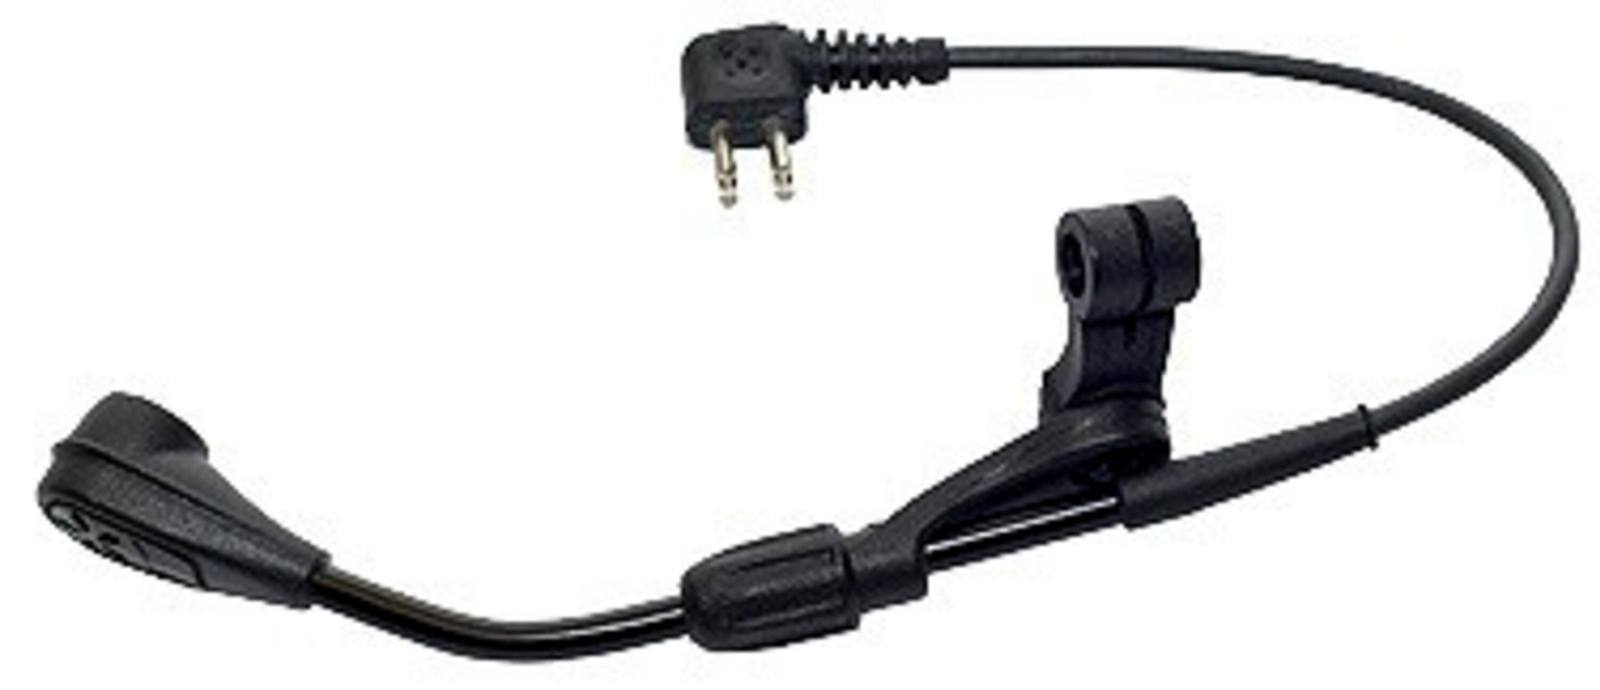 3M PELTOR micrófono electret de brazo MT53N-14/1, con clavija, 240 mm, incl. pantalla antiviento, M995/2